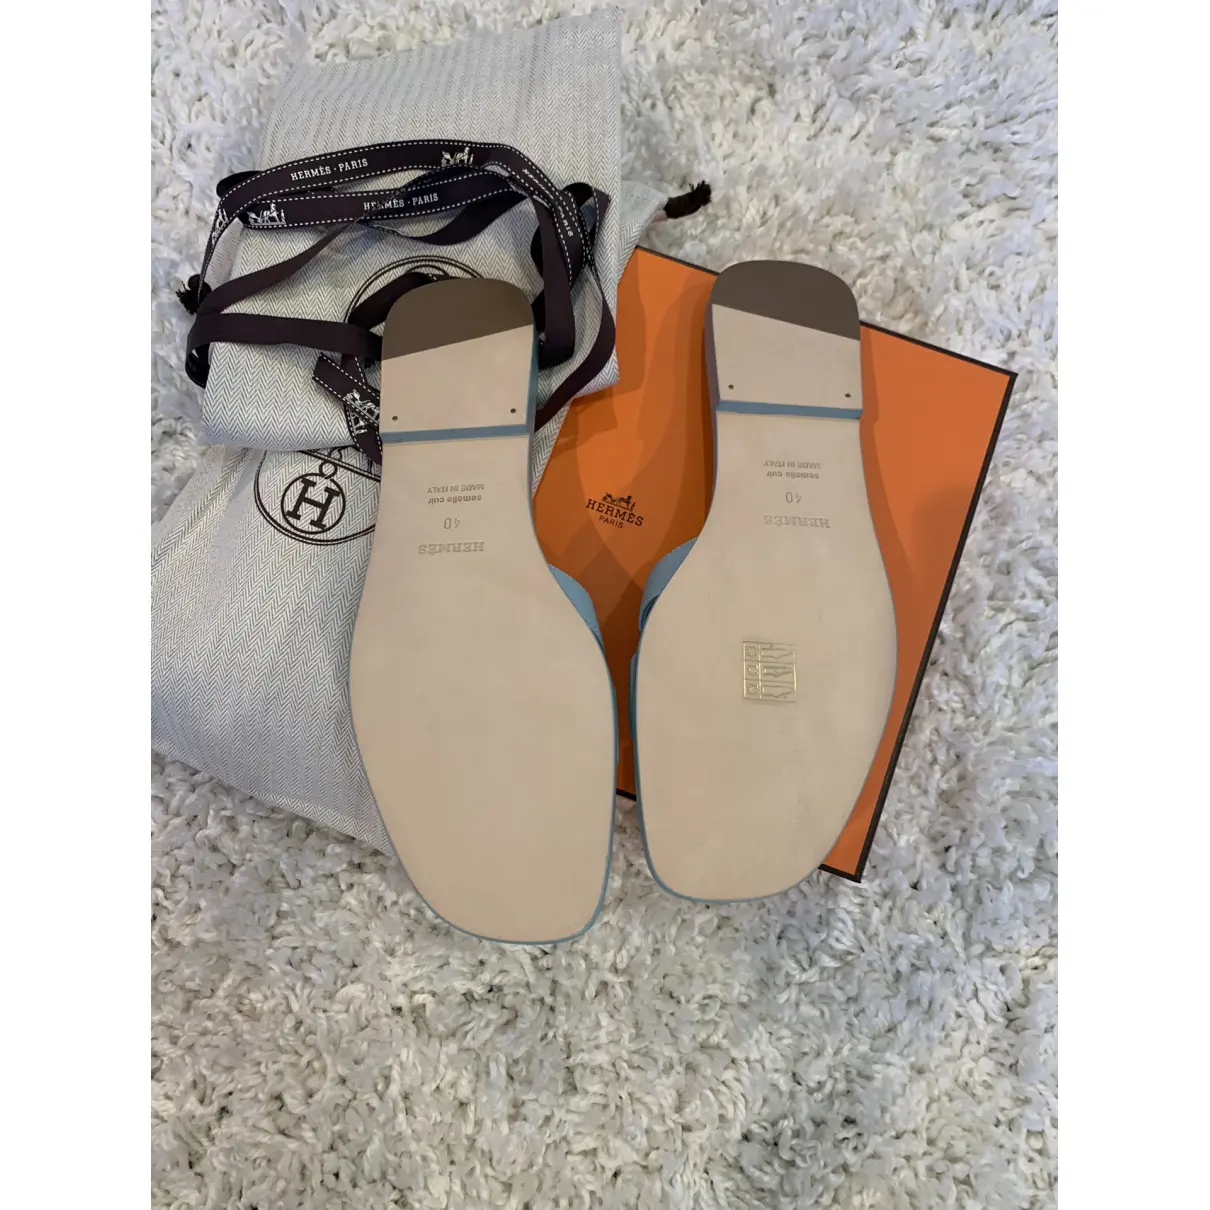 Buy Hermès Oran leather sandal online